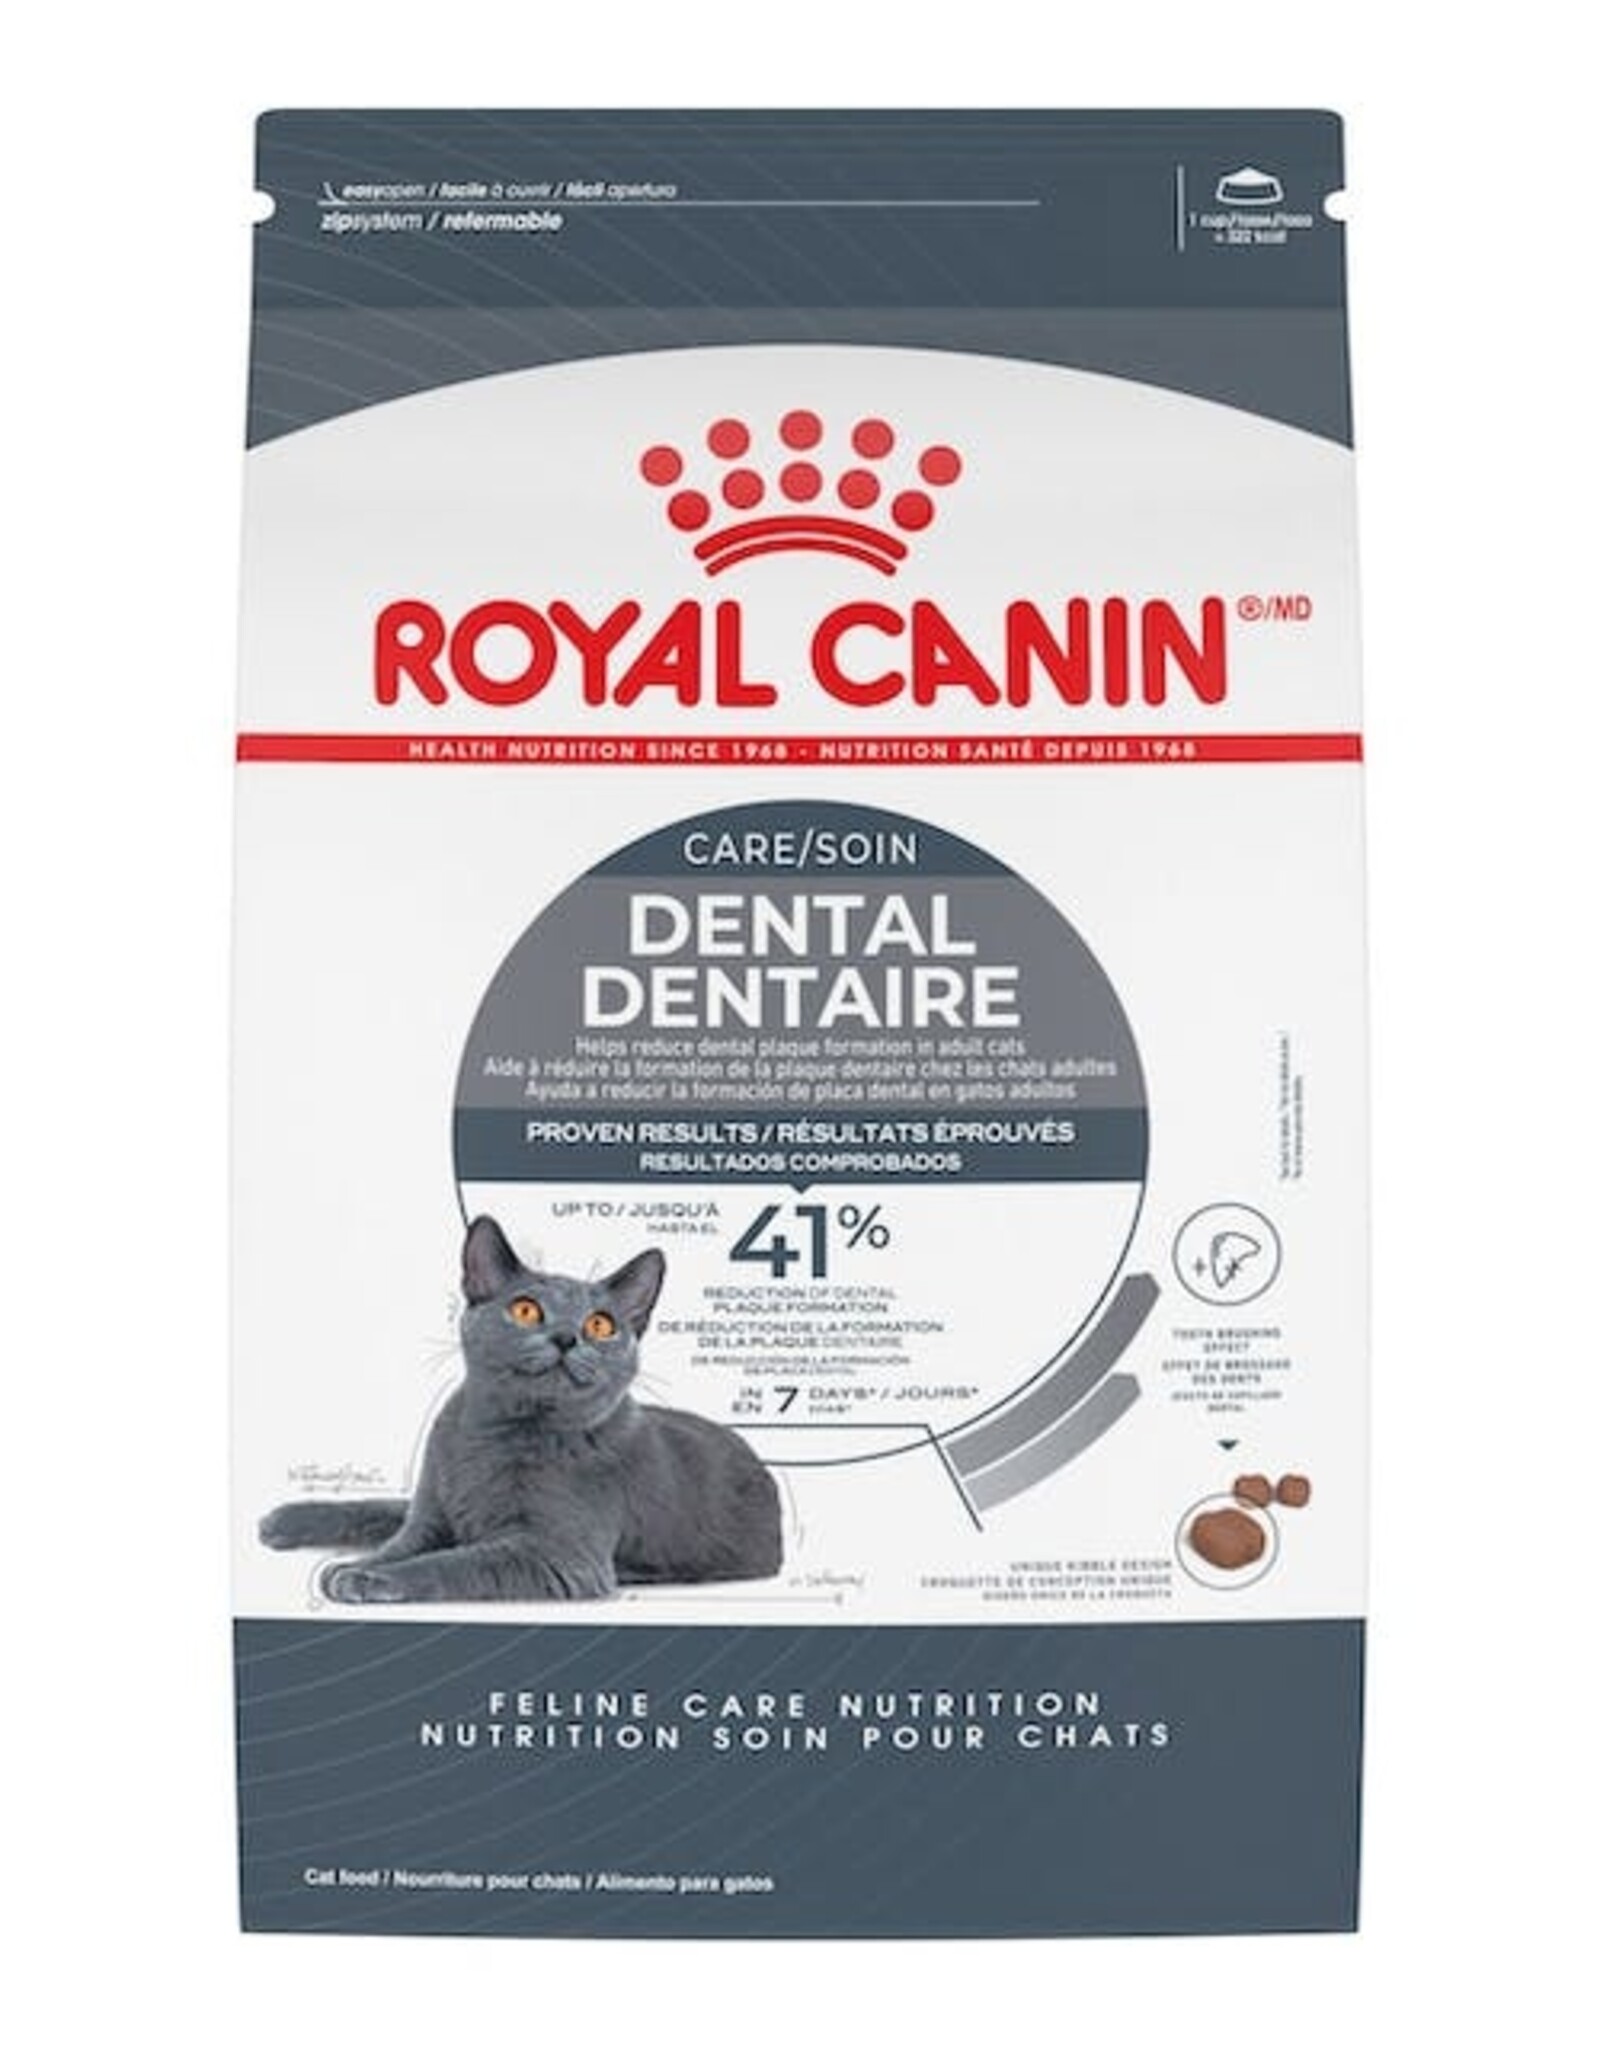 ROYAL CANIN ROYAL CANIN CAT DENTAL CARE 6 LBS